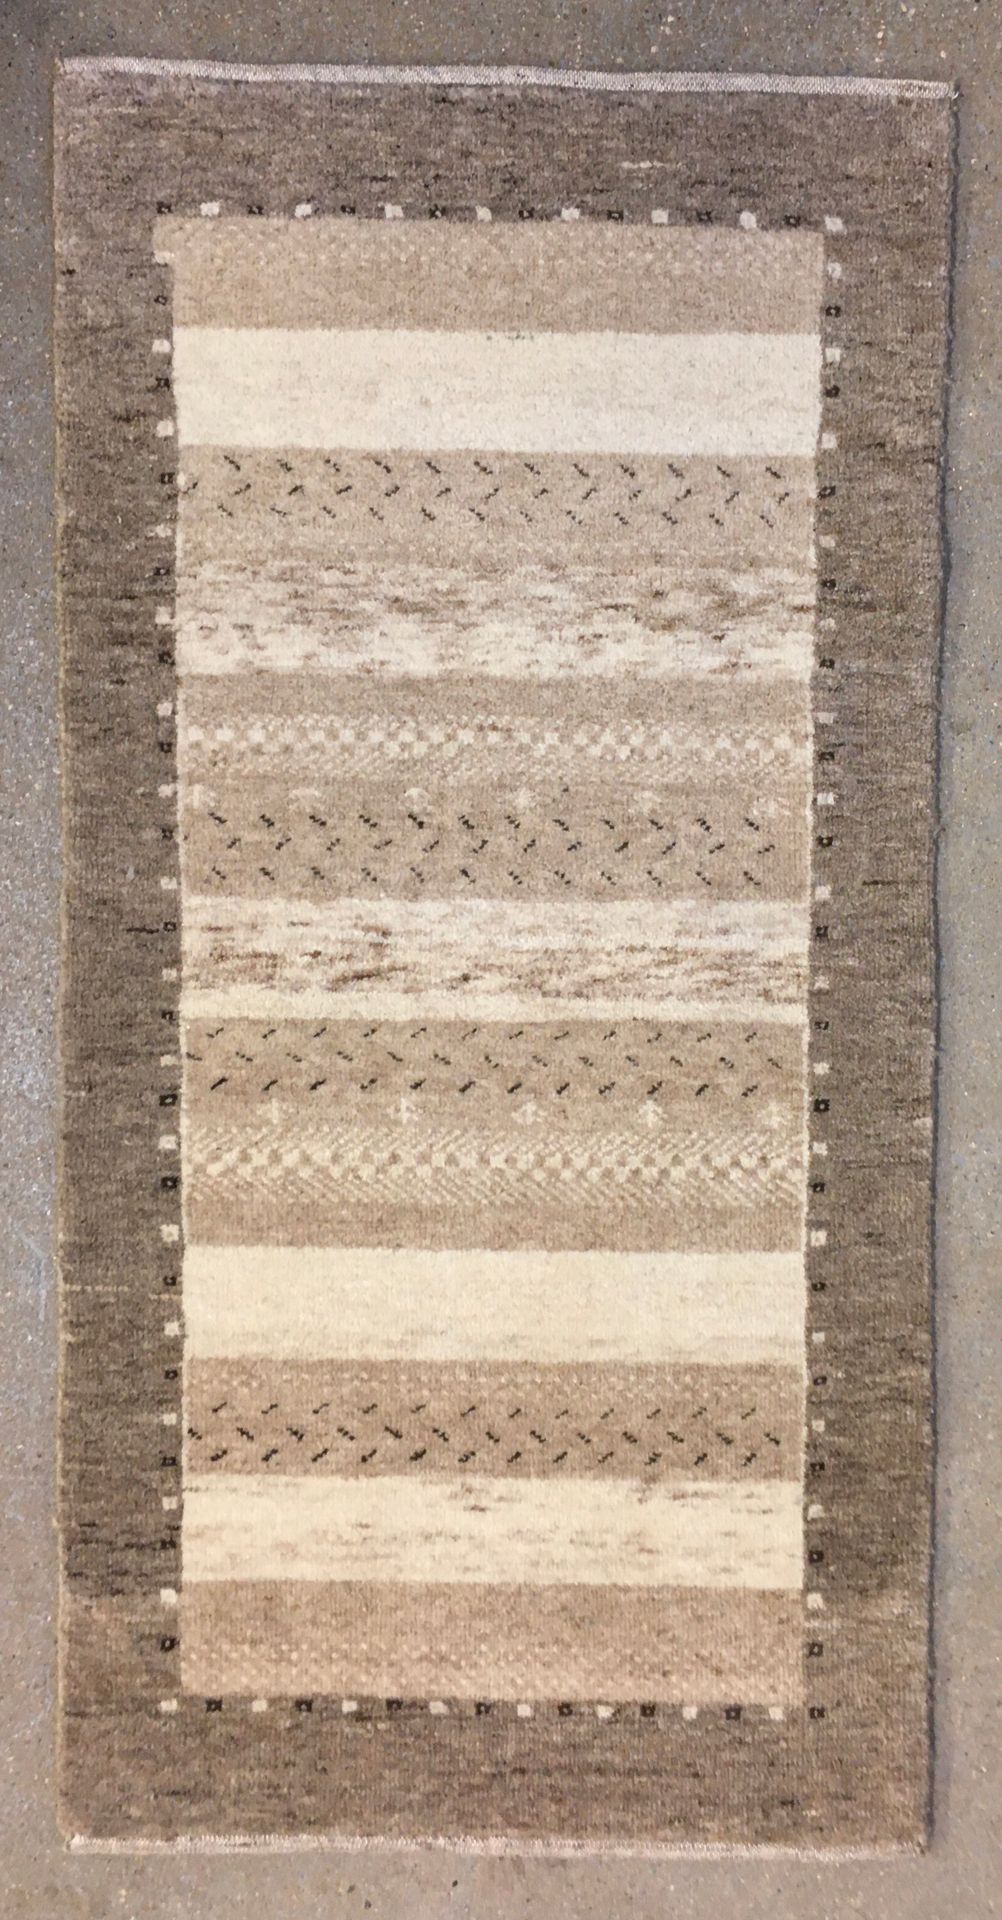 Null Gabbeh地毯（印度），棉质纬线和经线，羊毛绒，现代作品，米色和浅棕色，横条纹图案，20世纪末。尺寸：1.36 X 0.67米